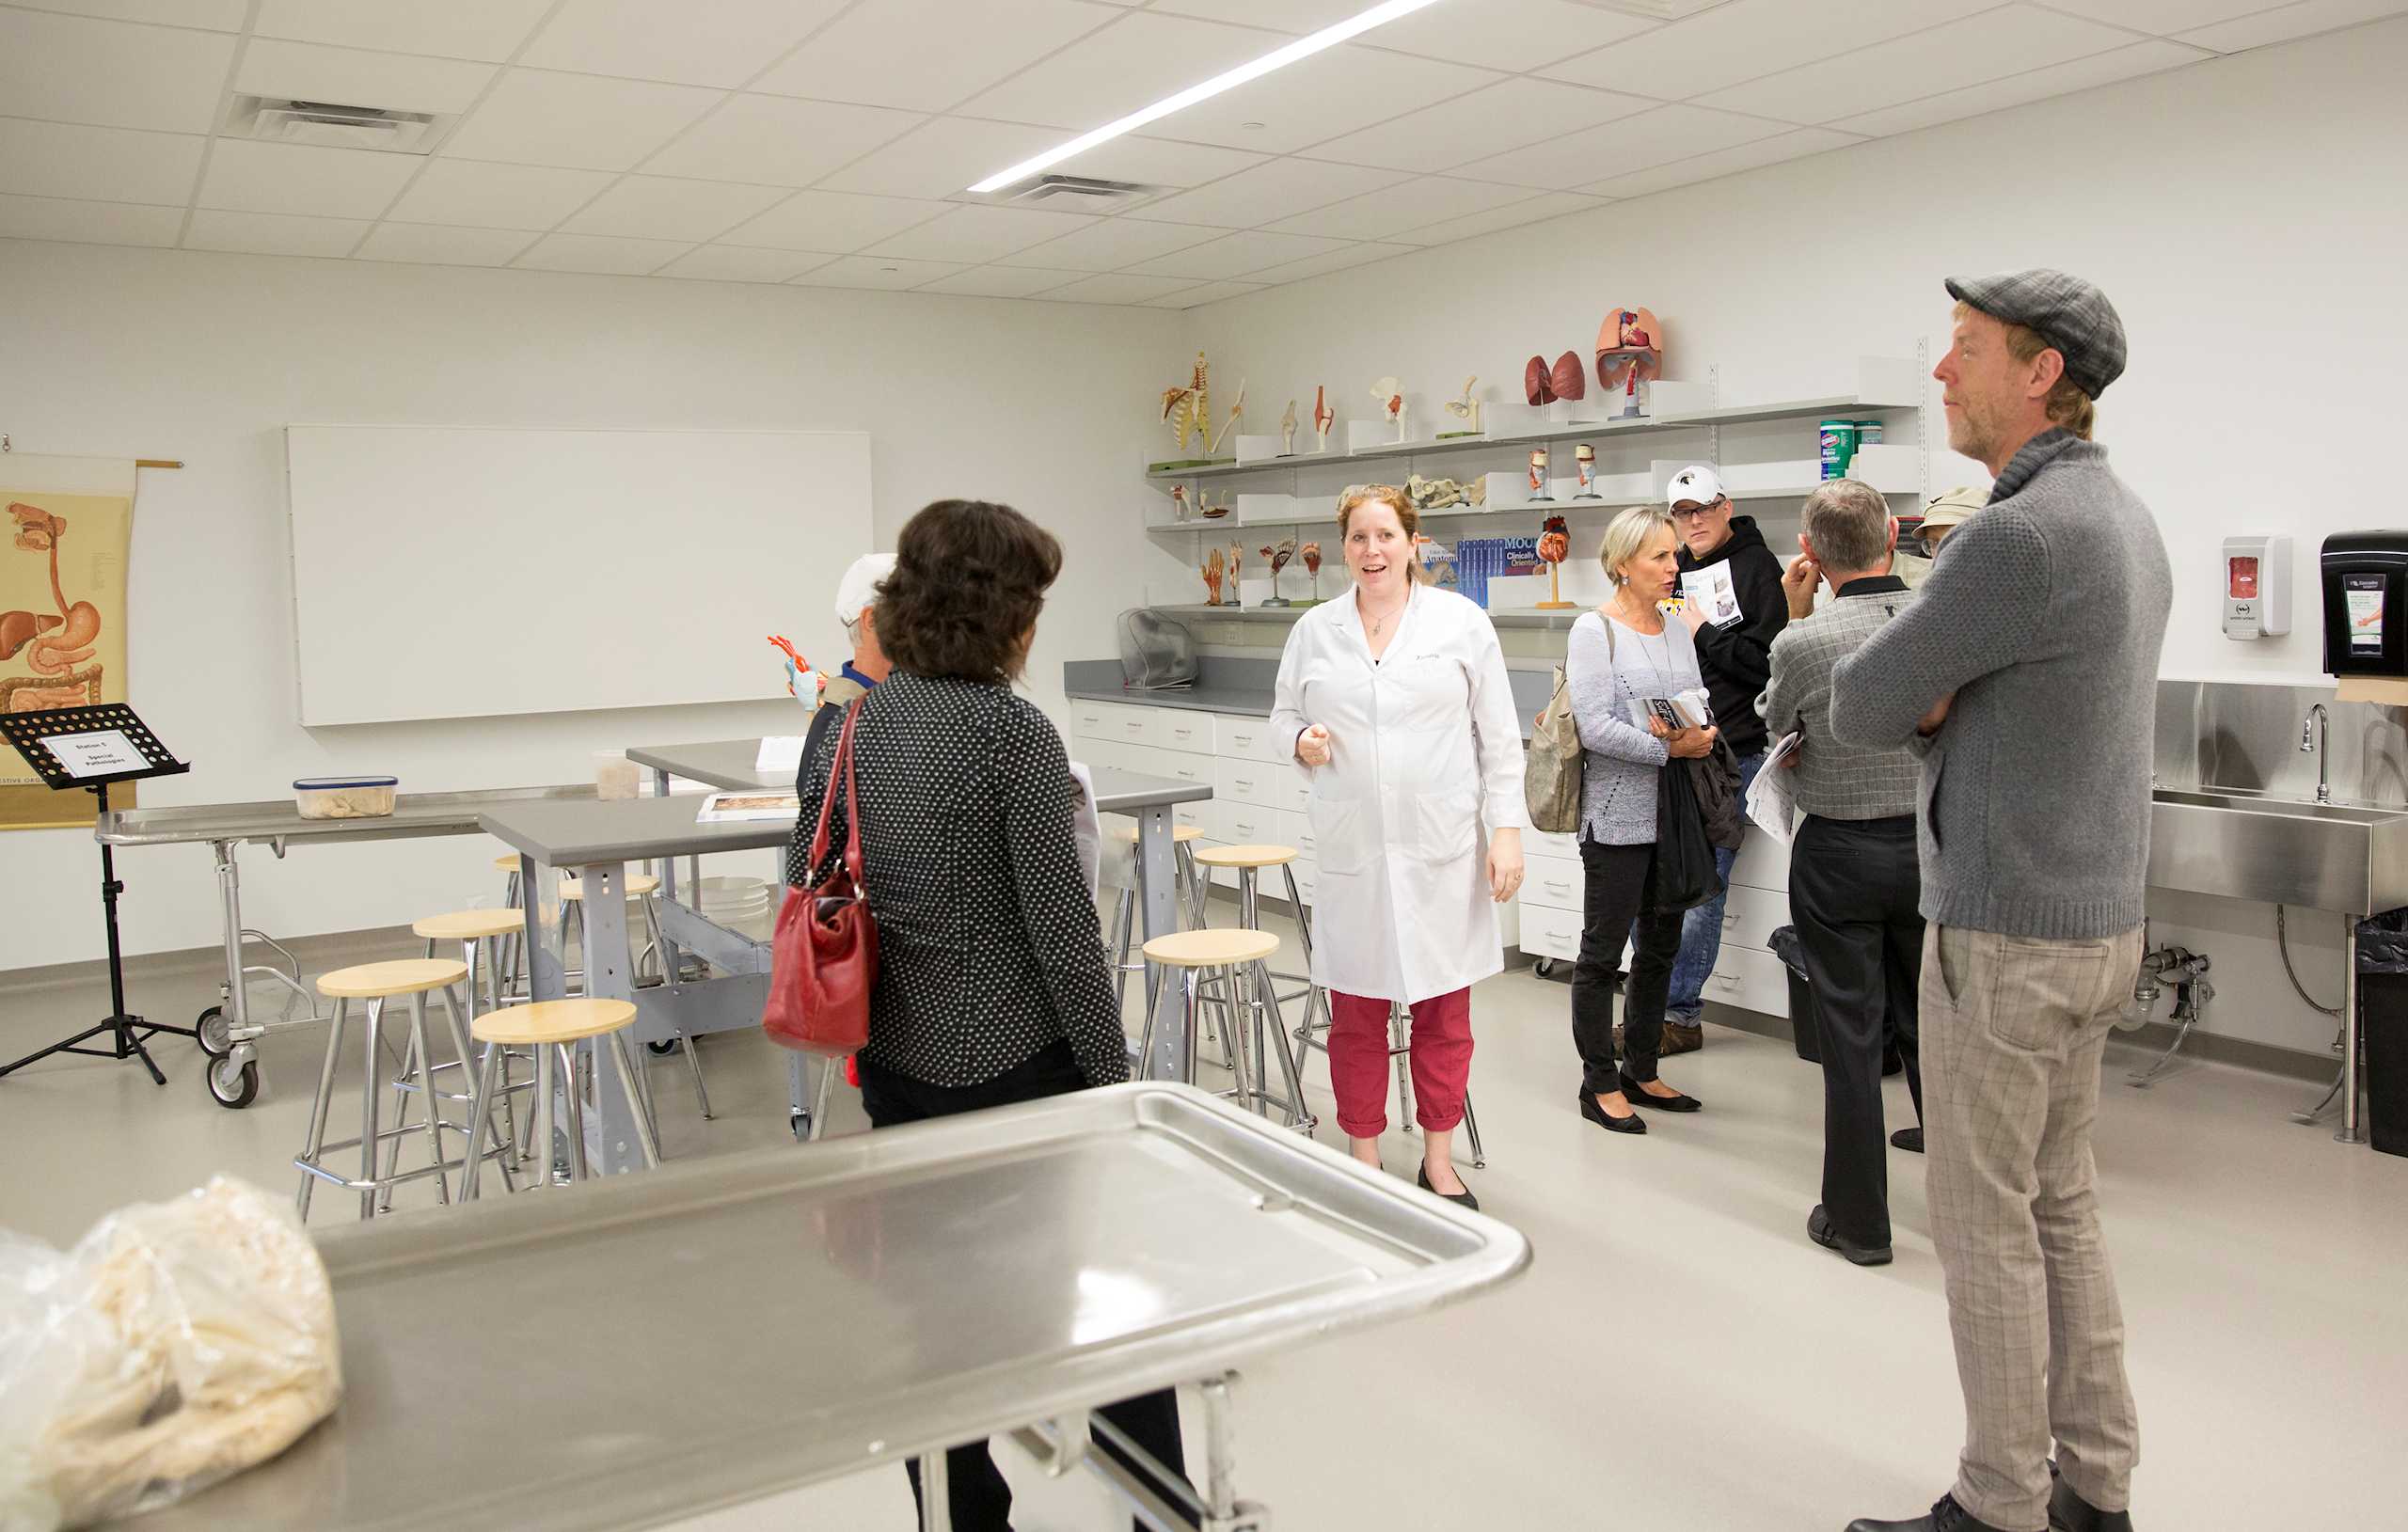 Tamara Maciel provides visitors with tours of new Anatomy lab.